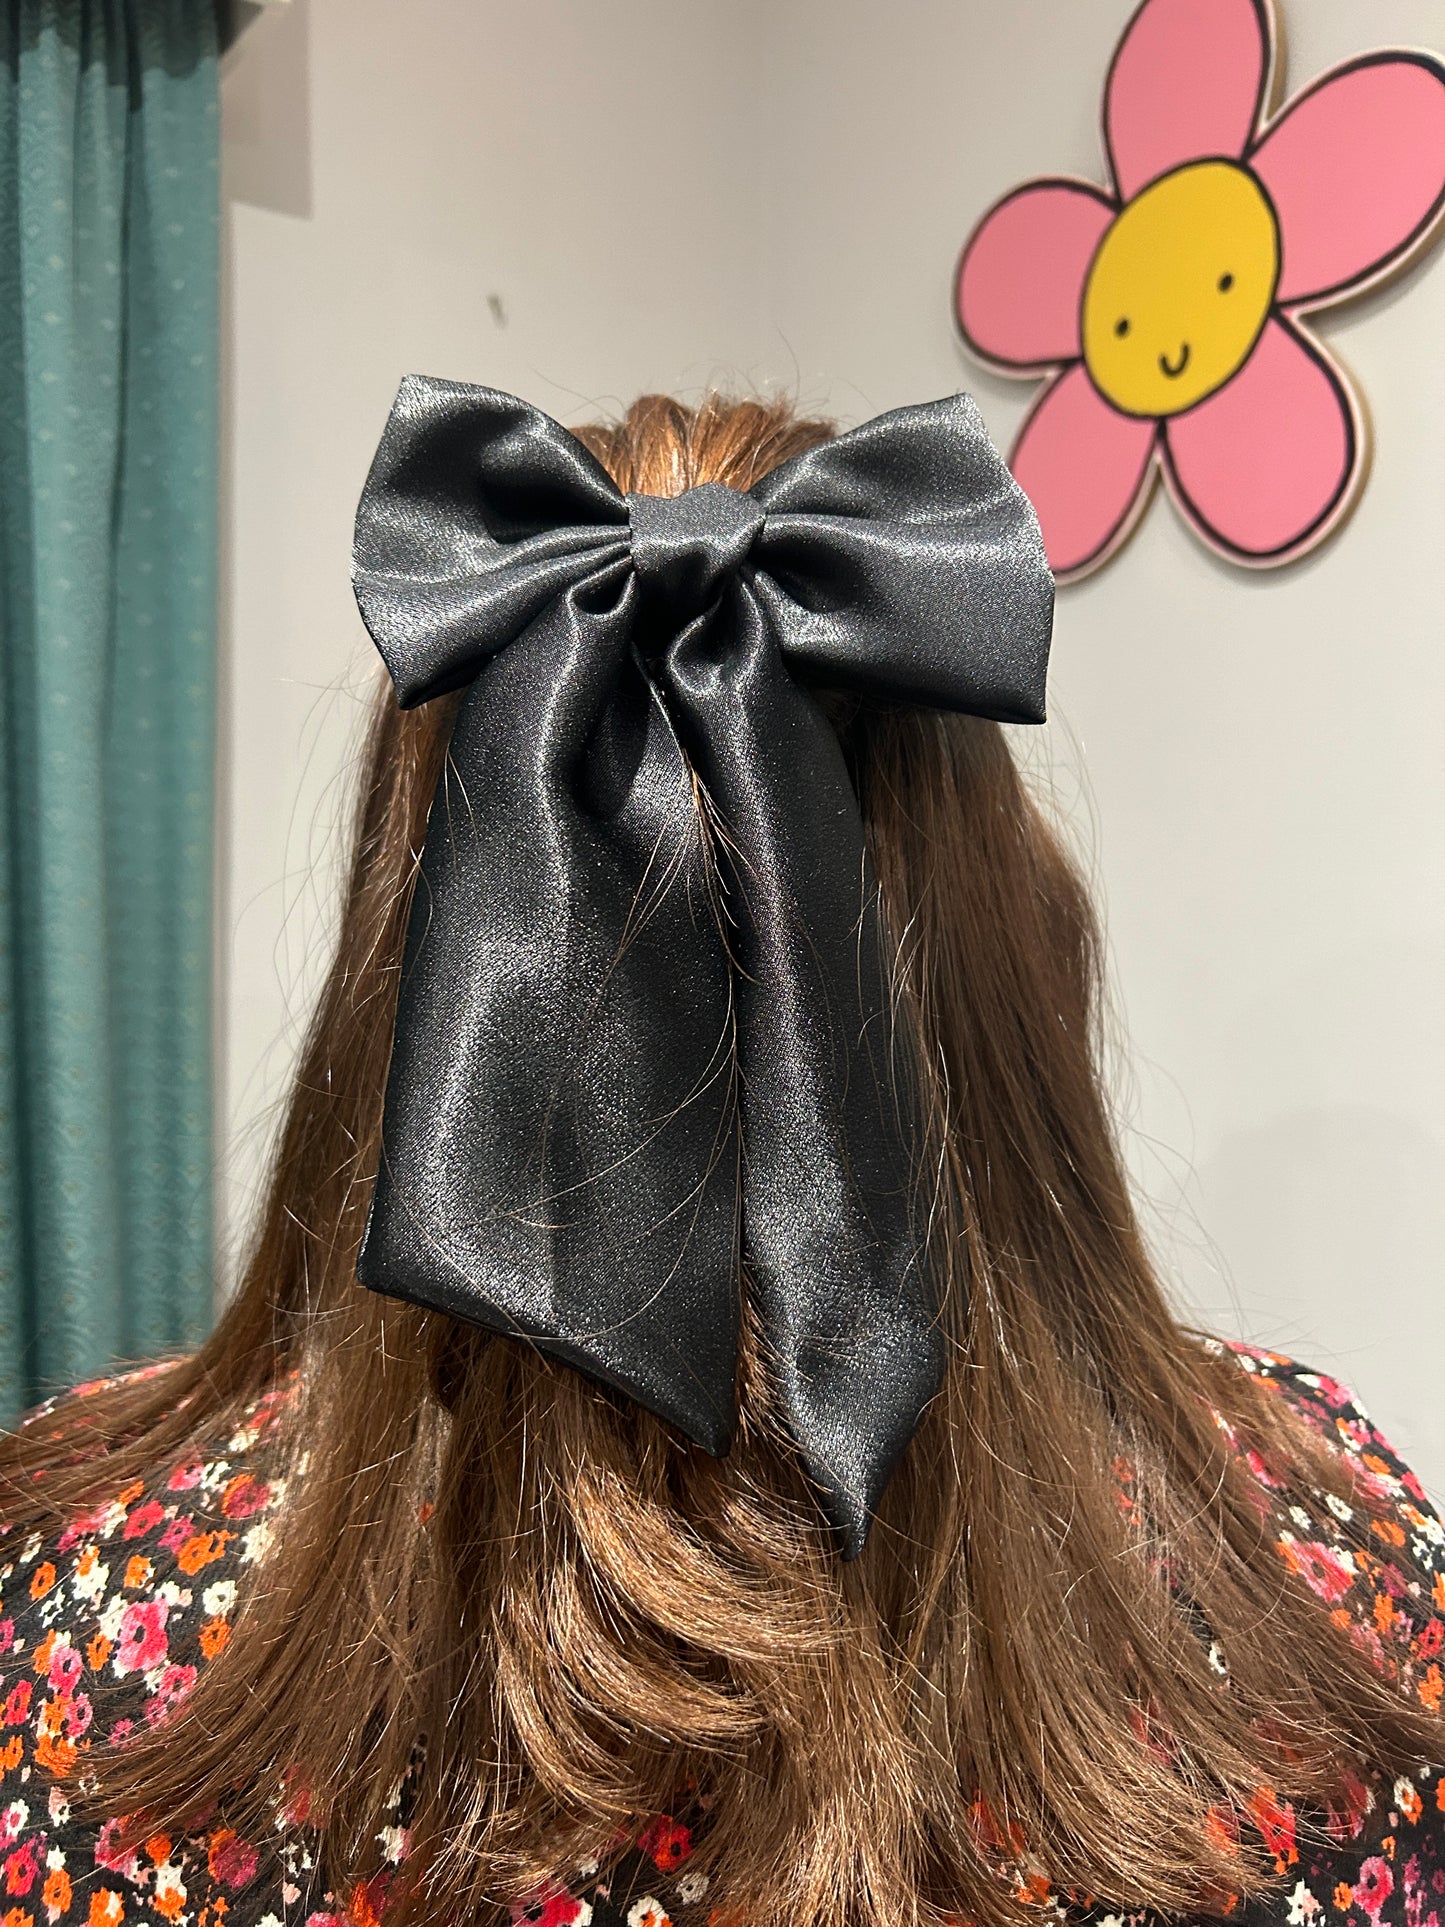 Large Luxury Black Satin Hair Bow